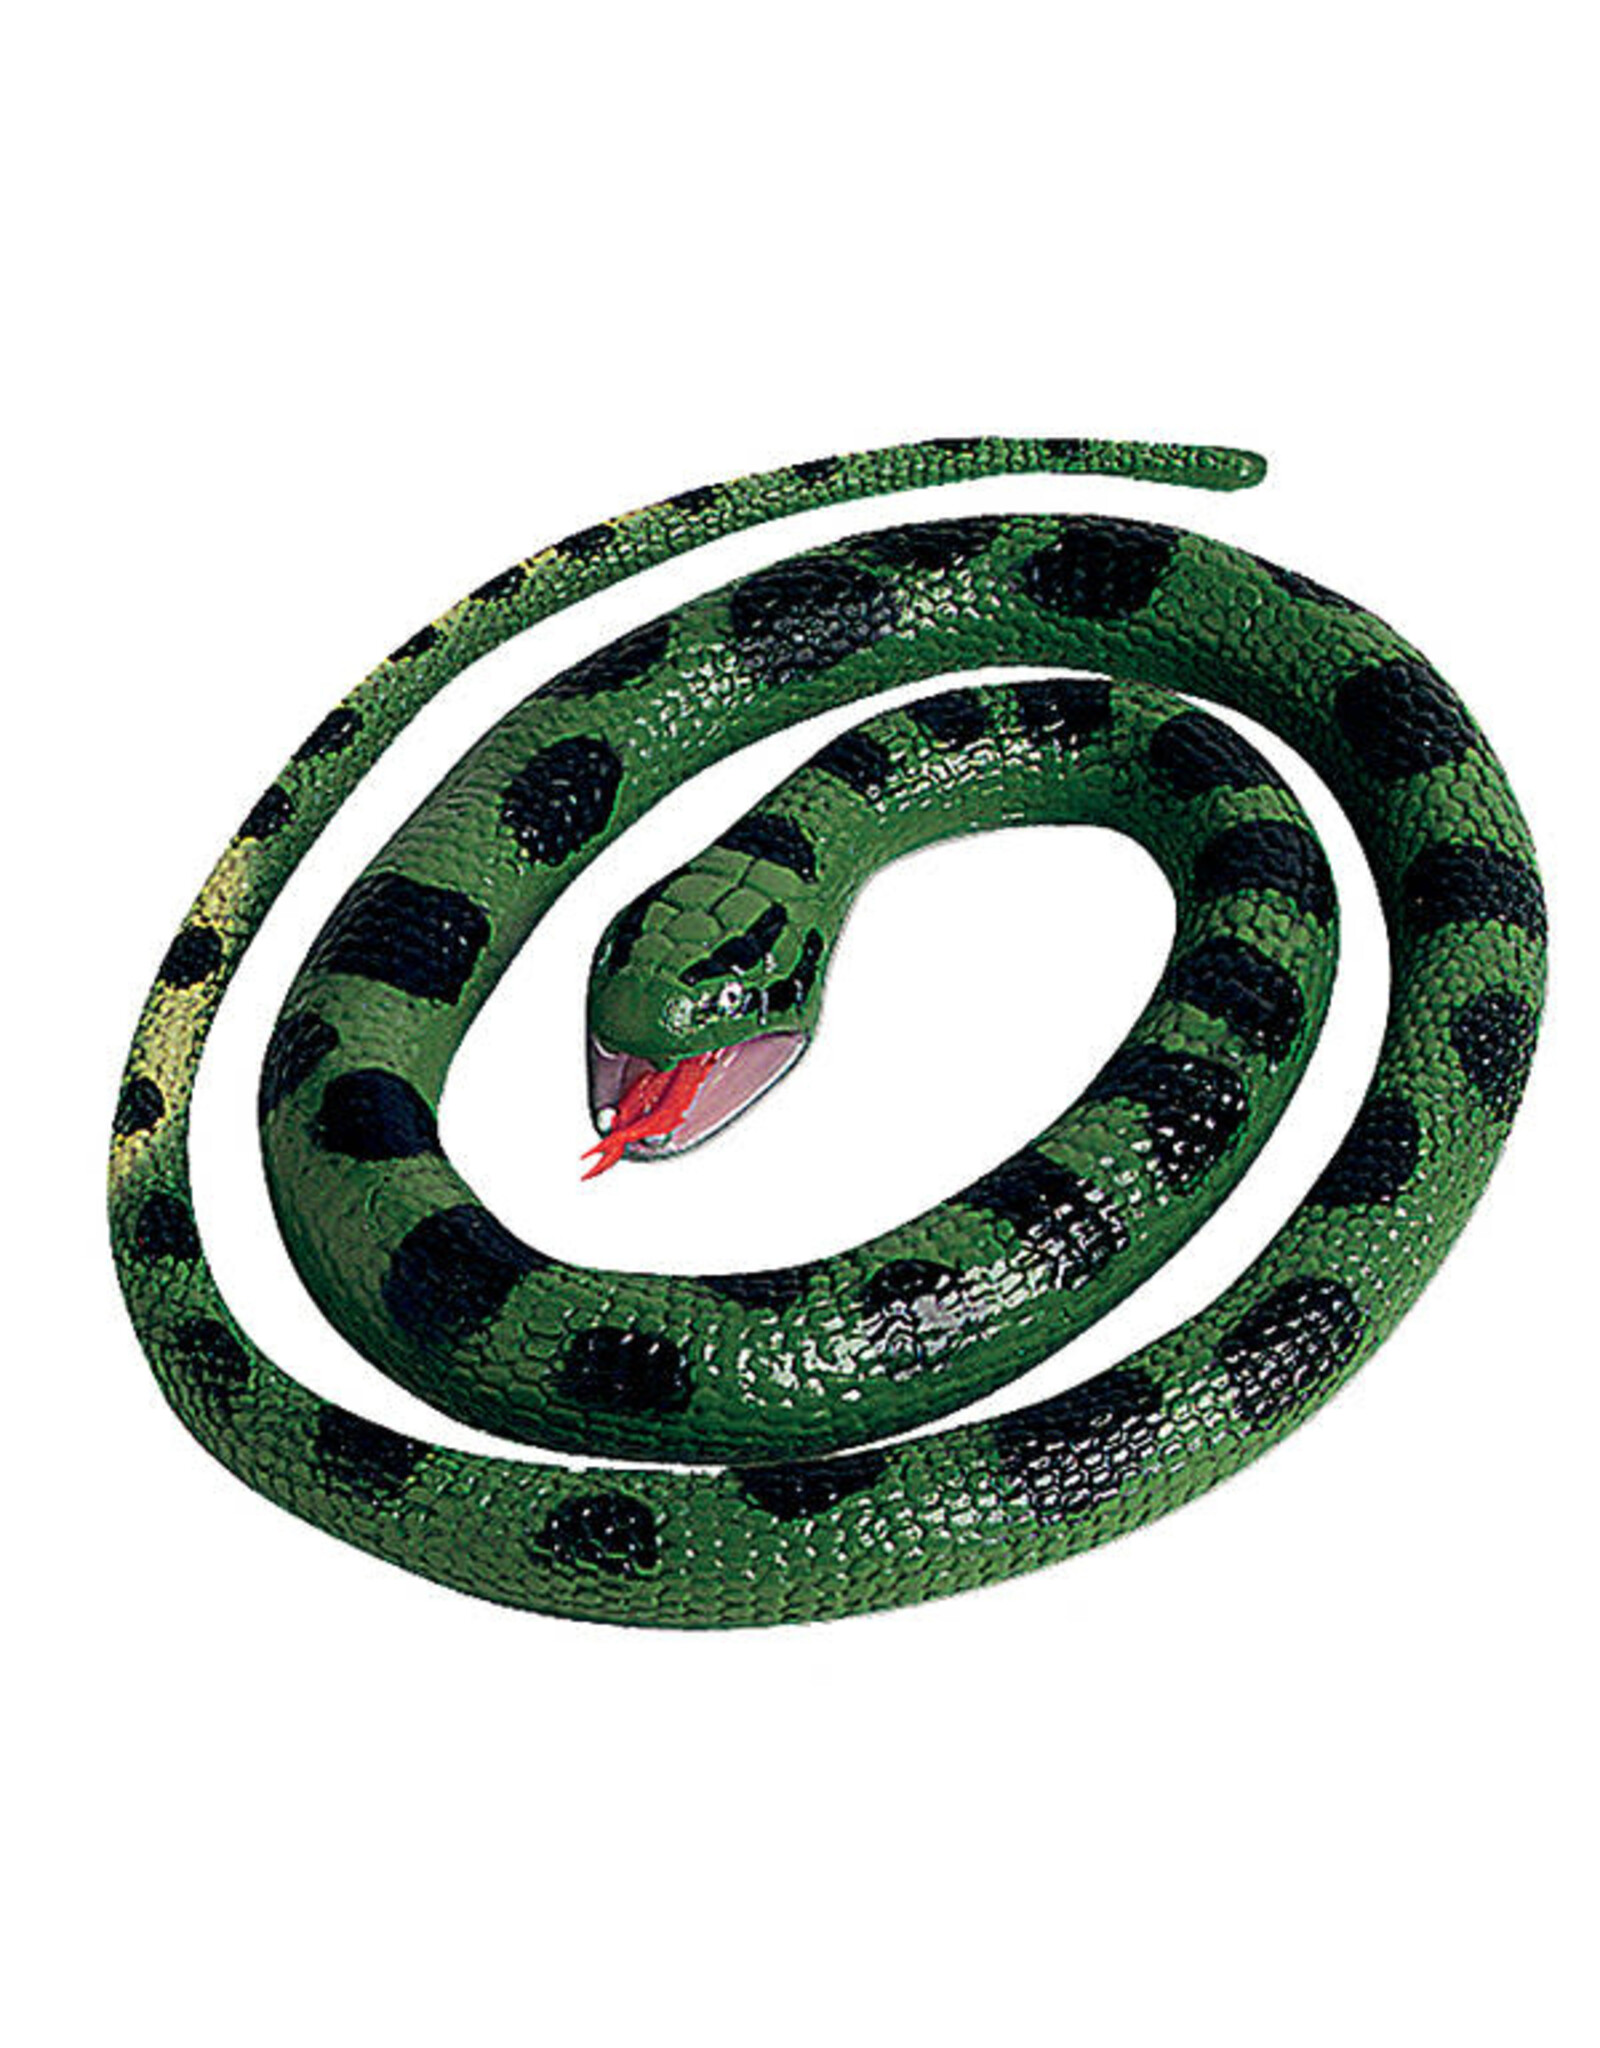 Rubber Snake - Anaconda